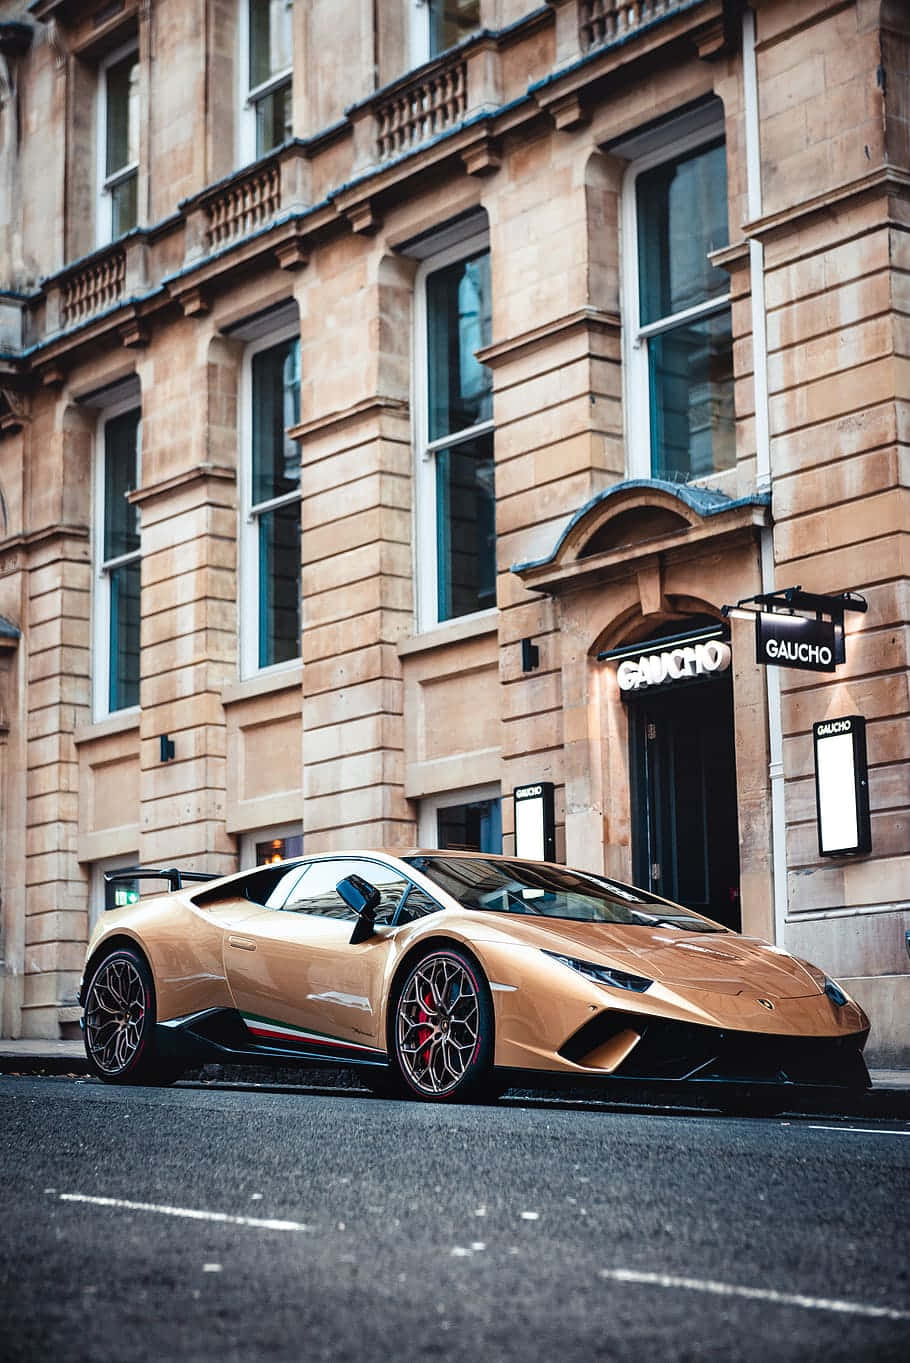 Gold Cars Lamborghini In City Wallpaper